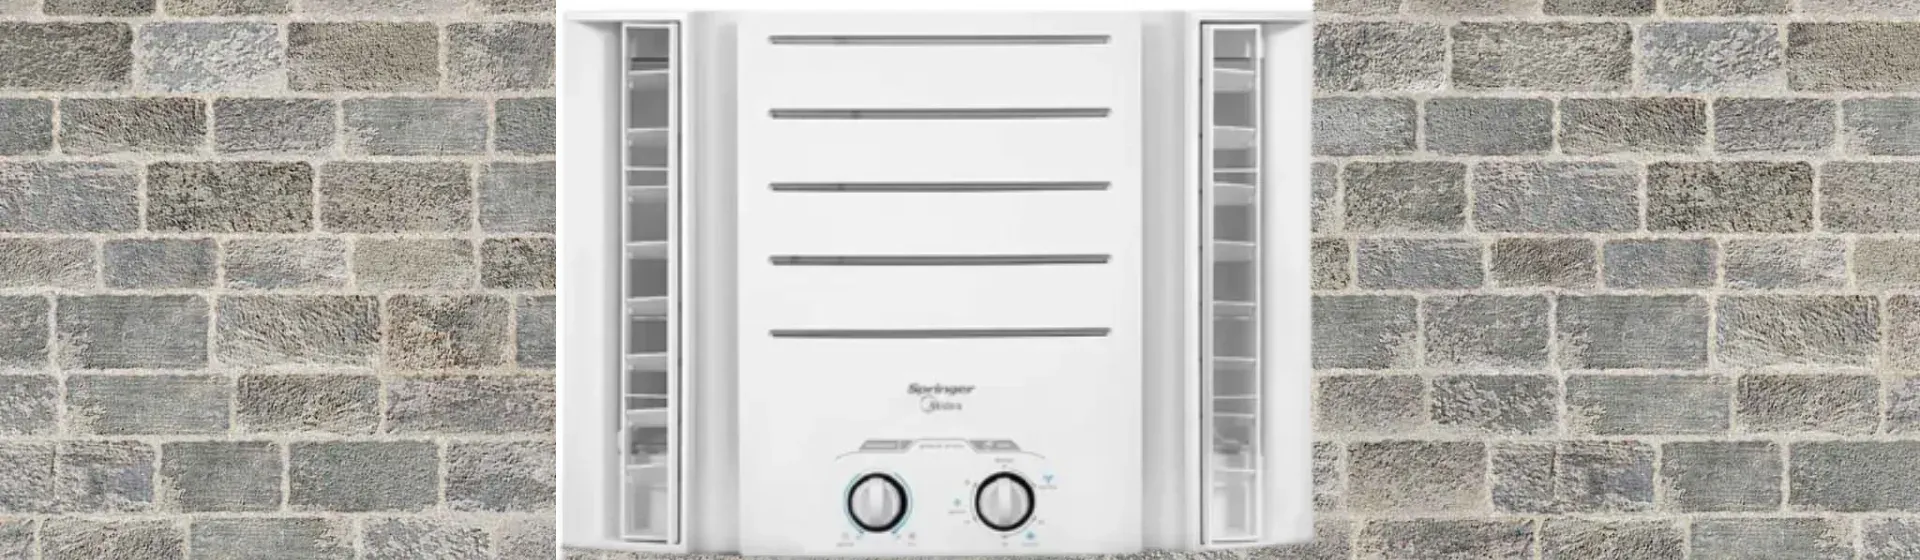 Ar-condicionado de janela Springer Midea: conheça os modelos QCI078BB e QCI108BB